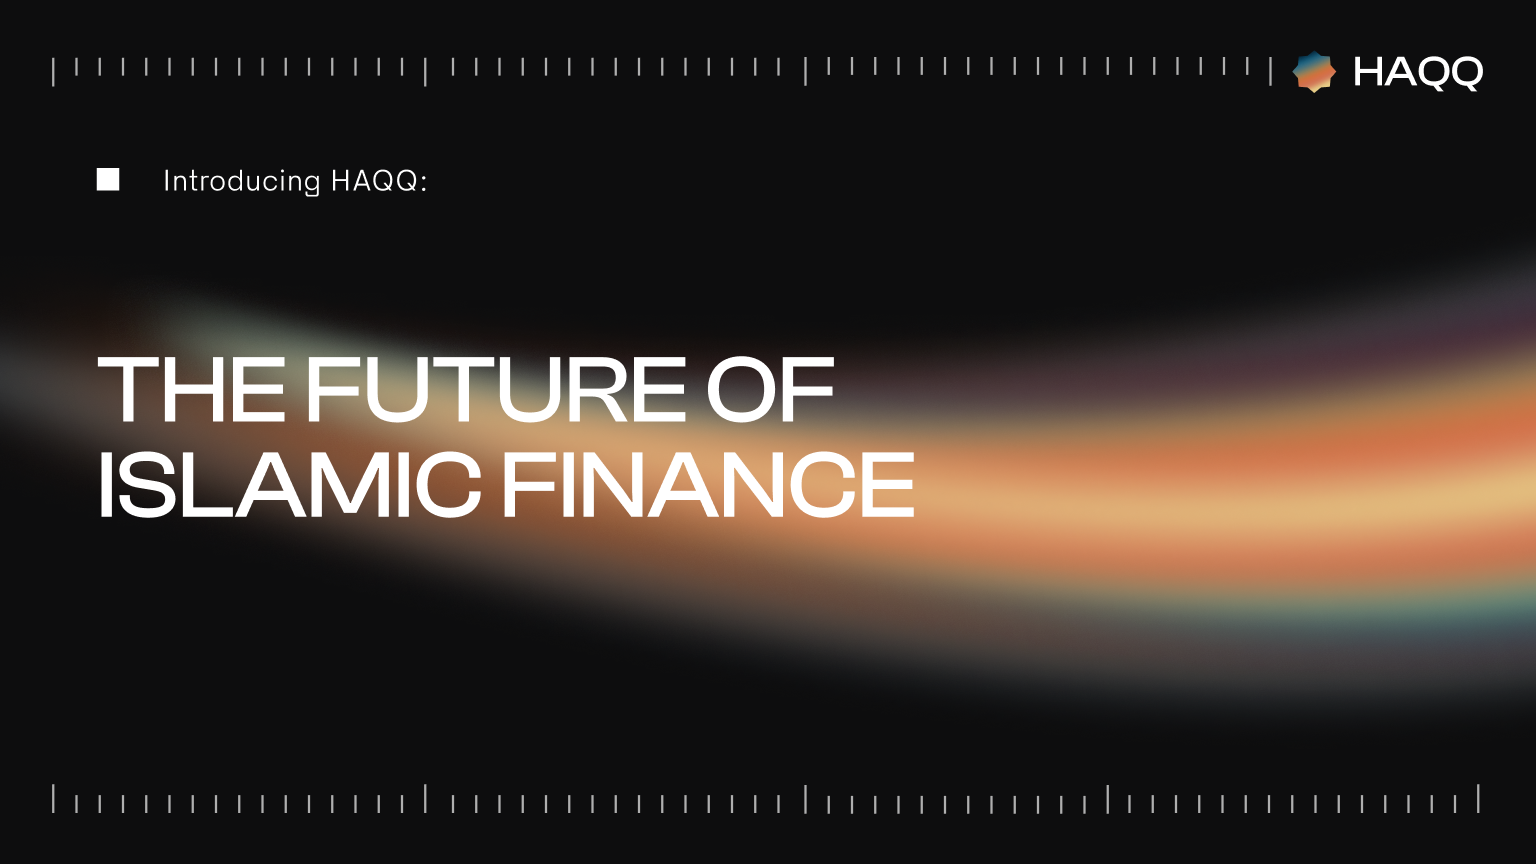 Introducing HAQQ: The Future of Islamic Finance